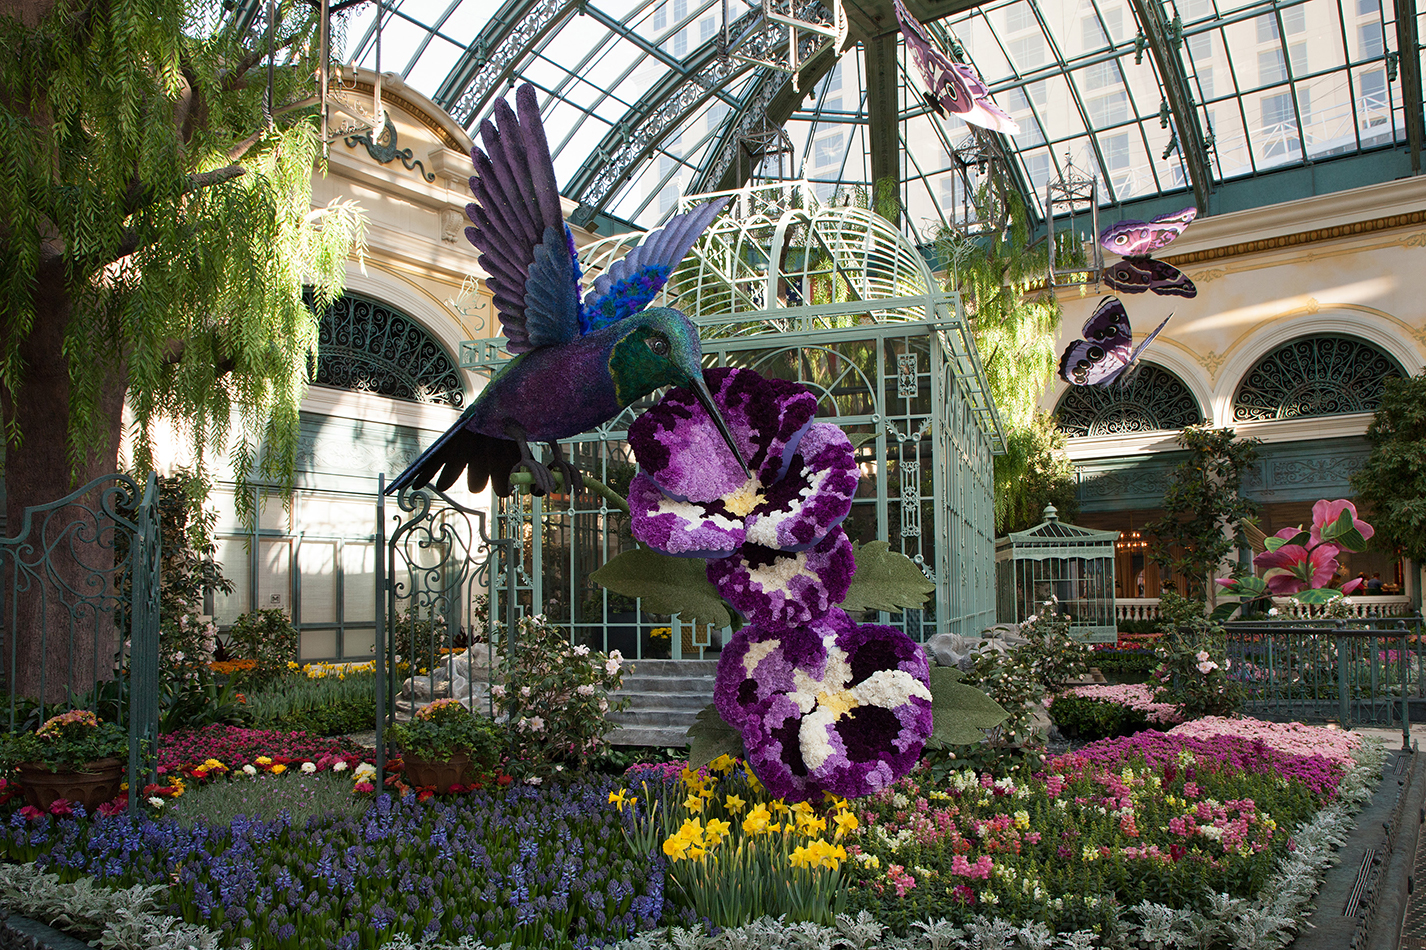 ‘Springtime Celebrations around the world’ display at Bellagio’s Conservatory & Botanical Garden